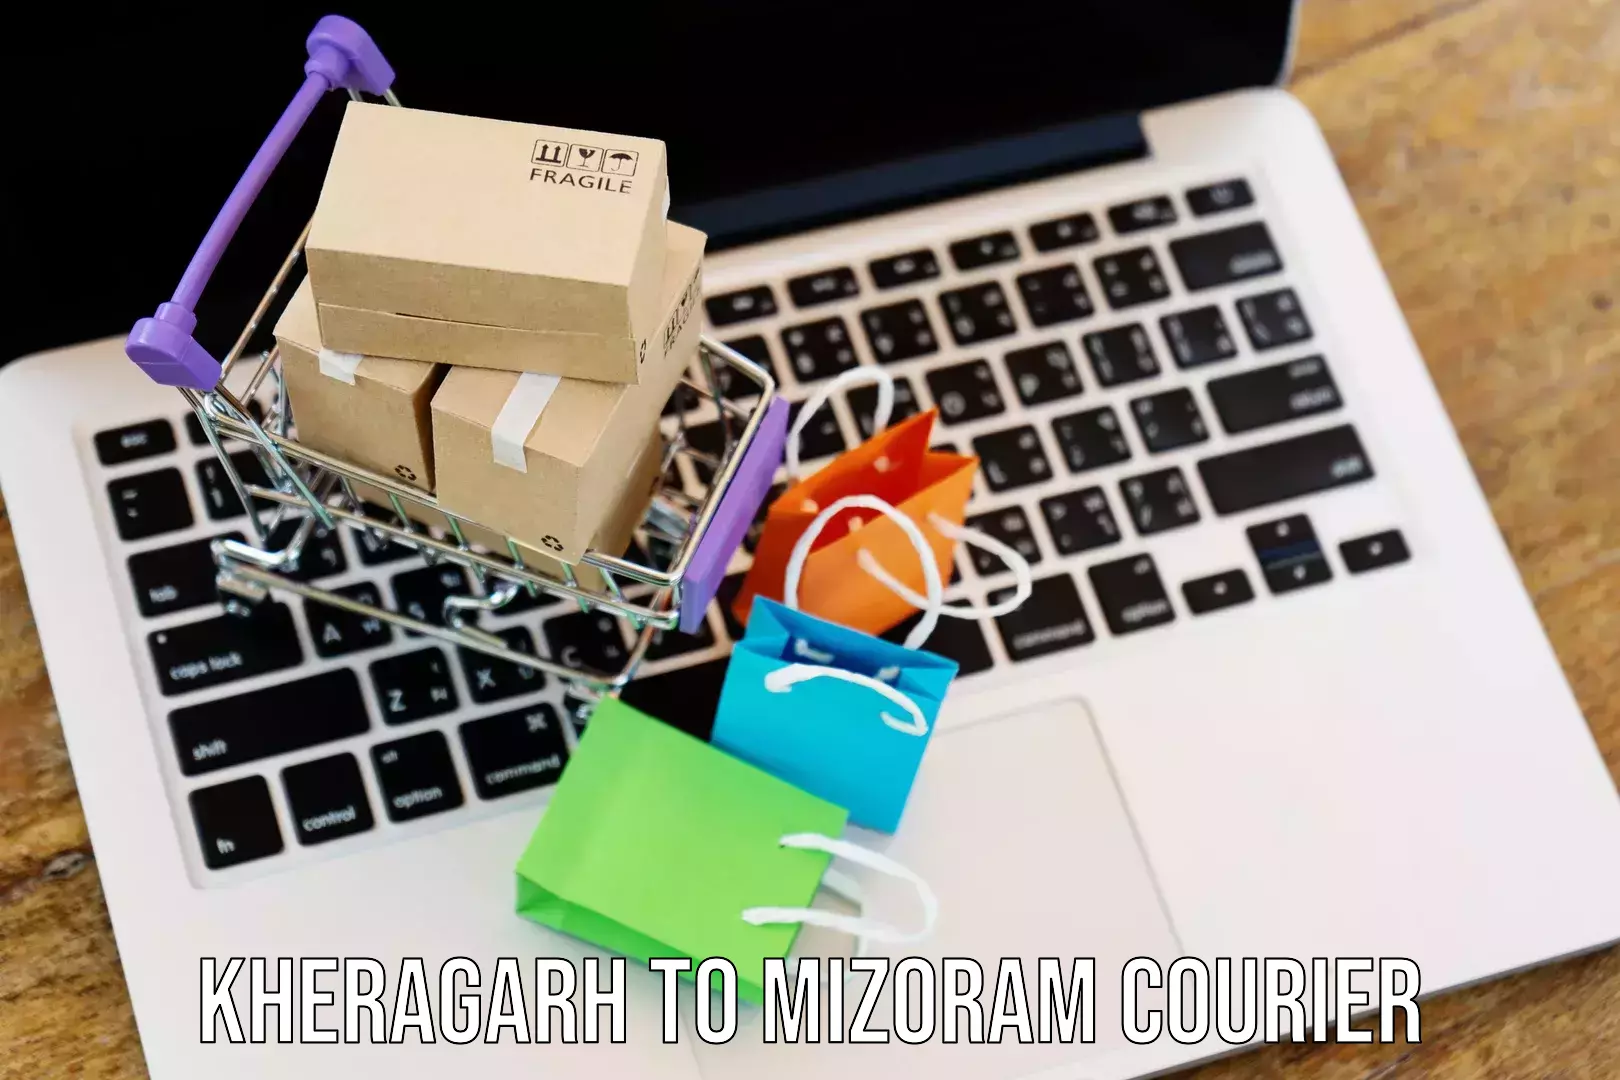 Automated shipping processes Kheragarh to Mizoram